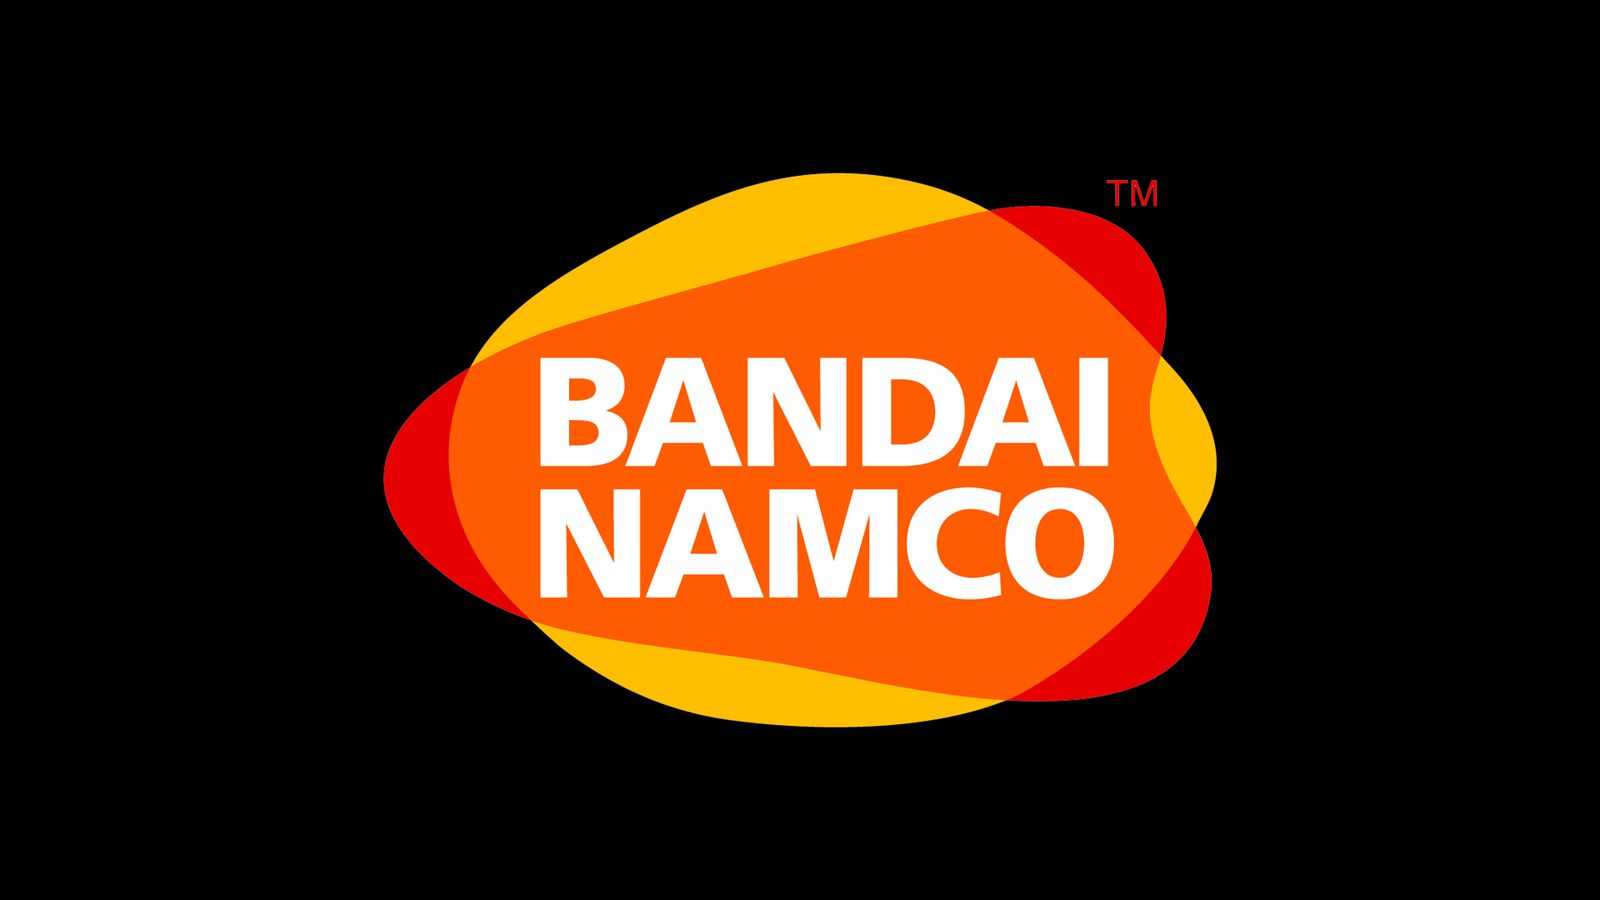 Bandai Namco voegt mankracht toe ontwikkelen Switch games